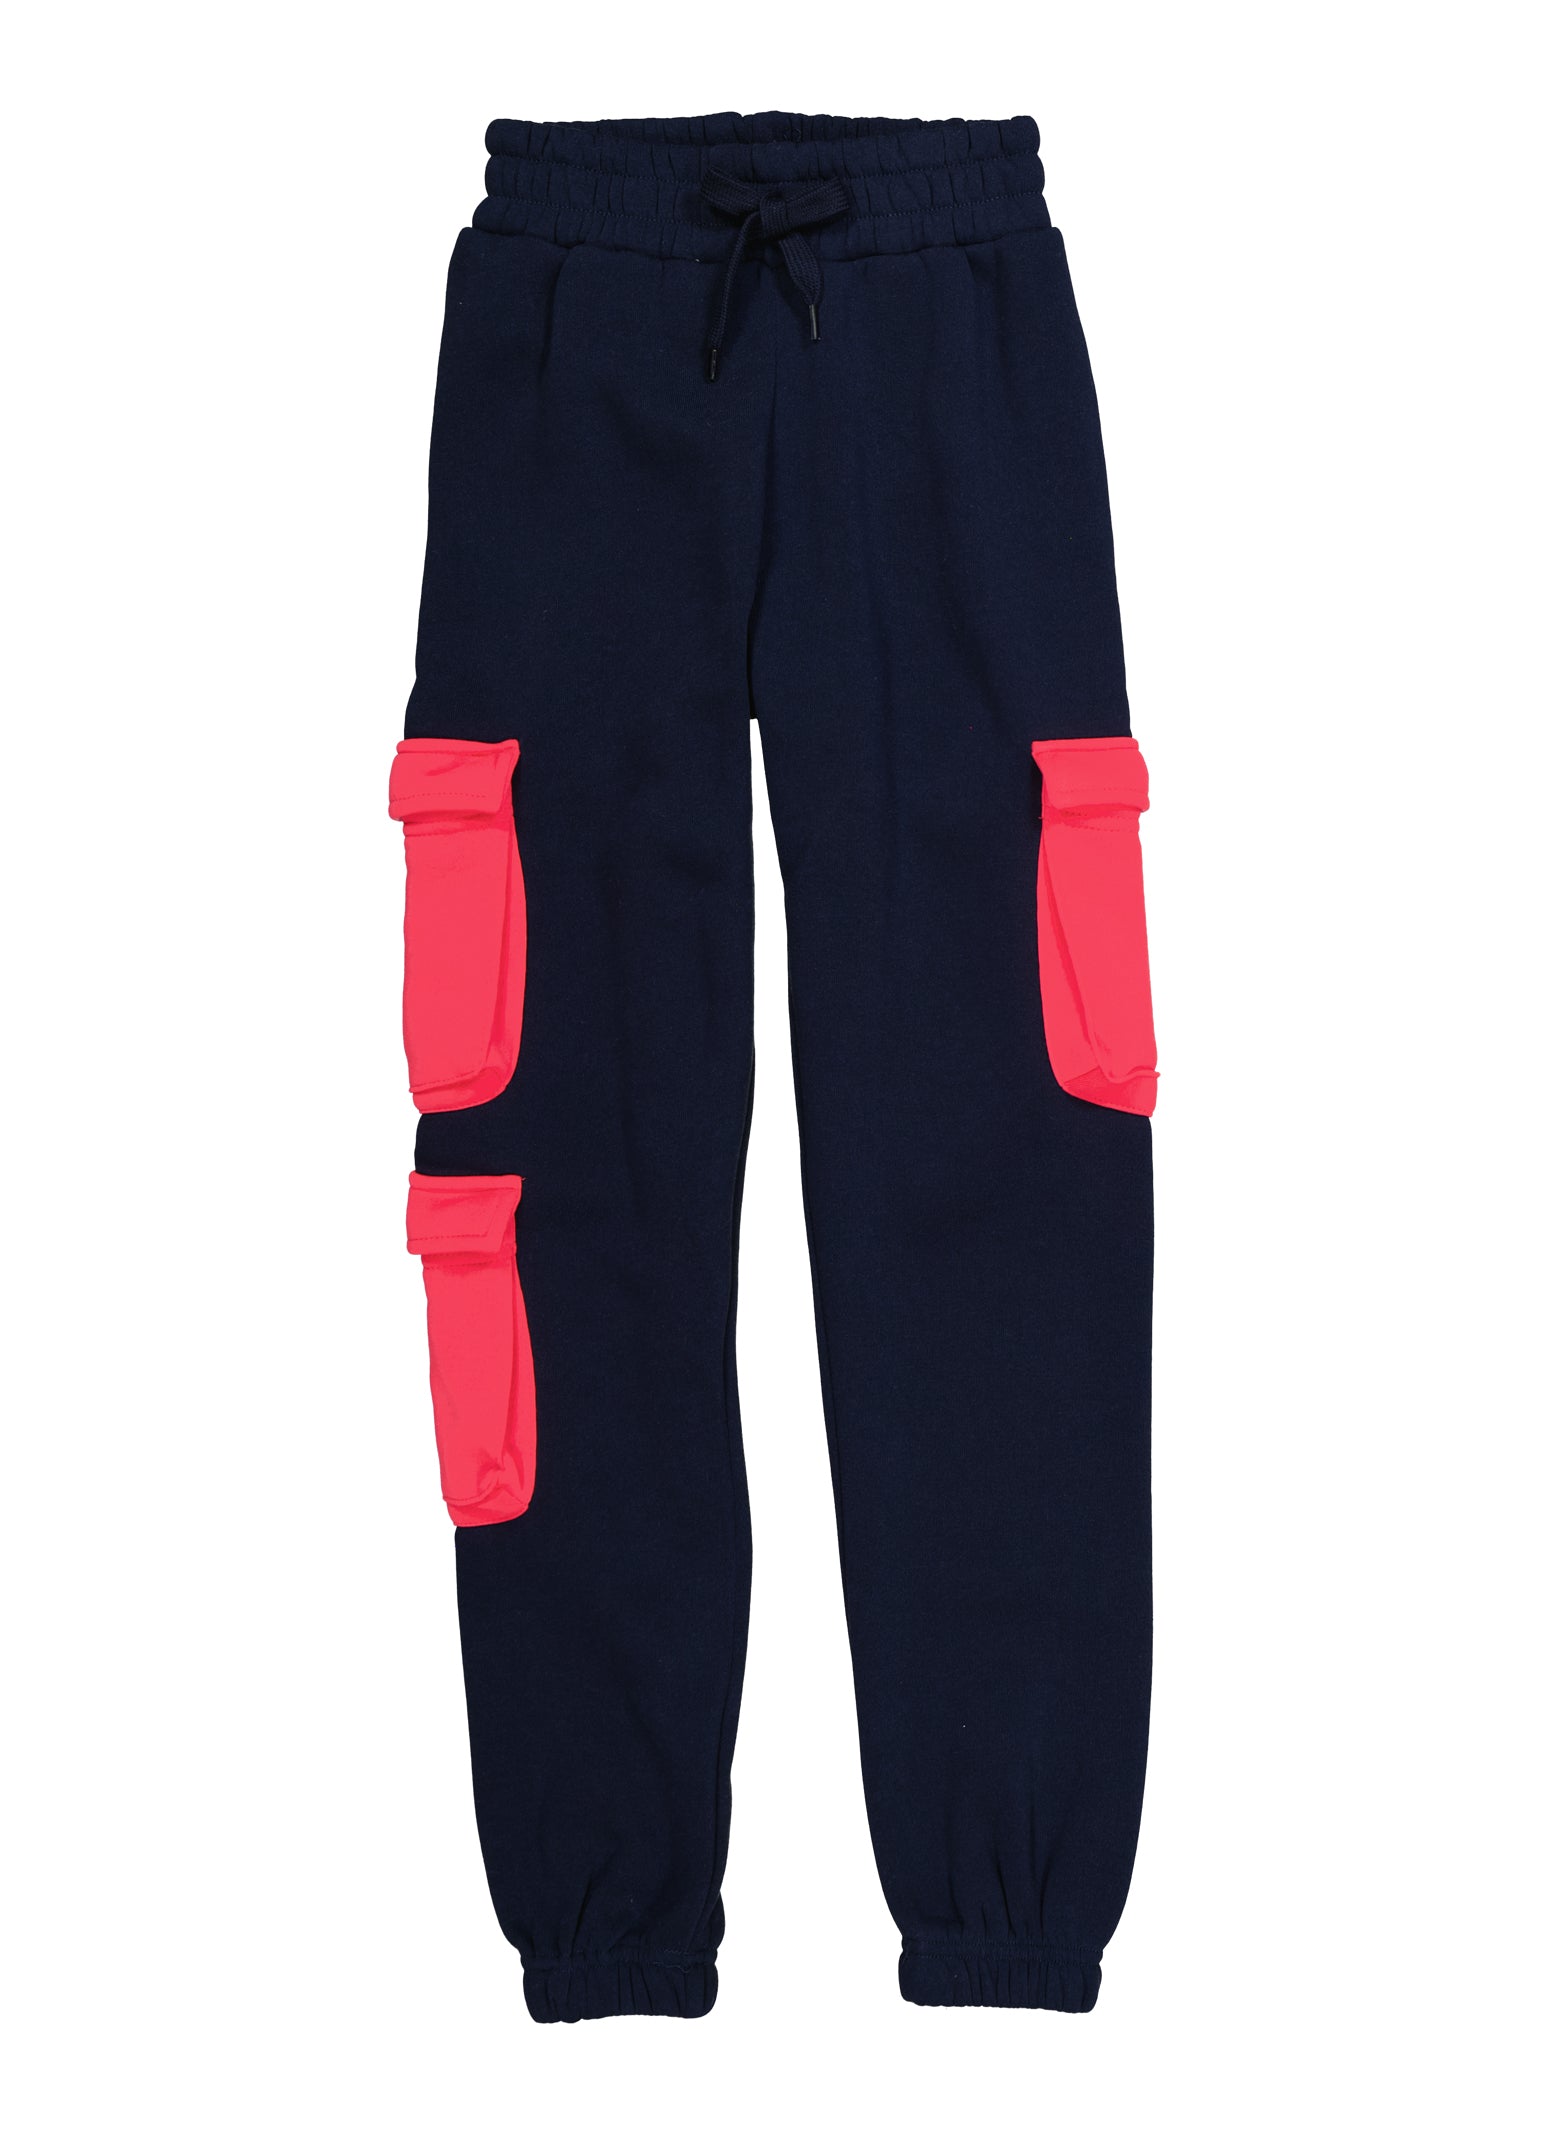 Girls Cargo Pocket Drawstring Sweatpants, Blue, Size 7-8